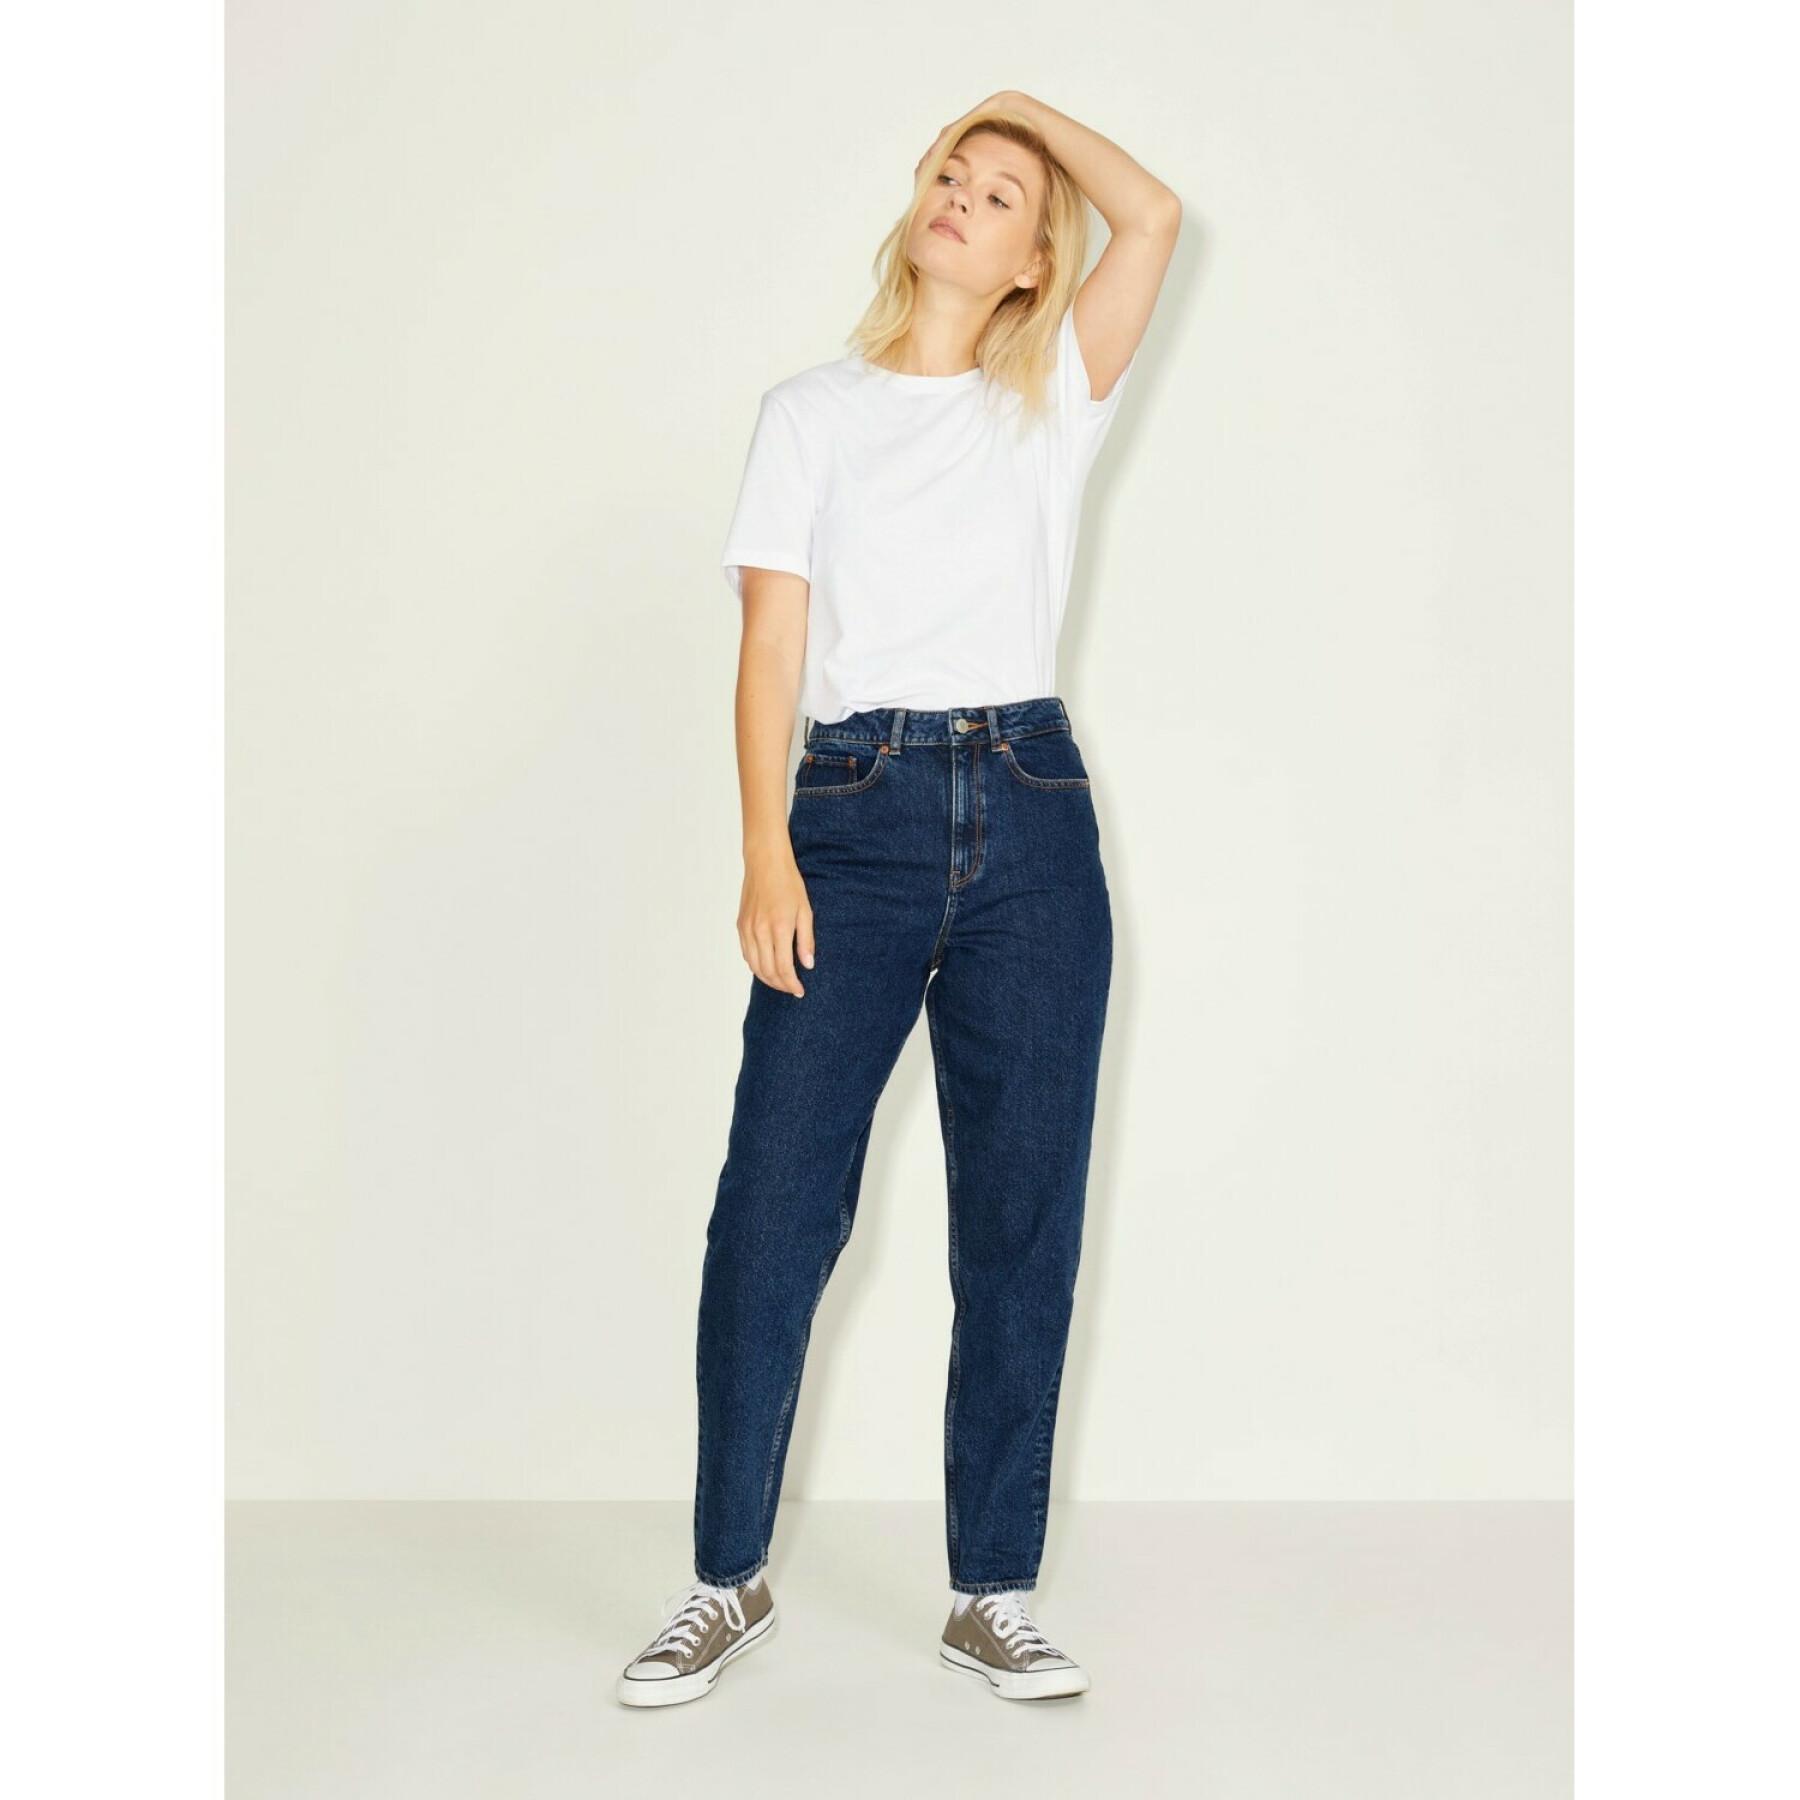 Women's jeans JJXX lisbon mom nr4001